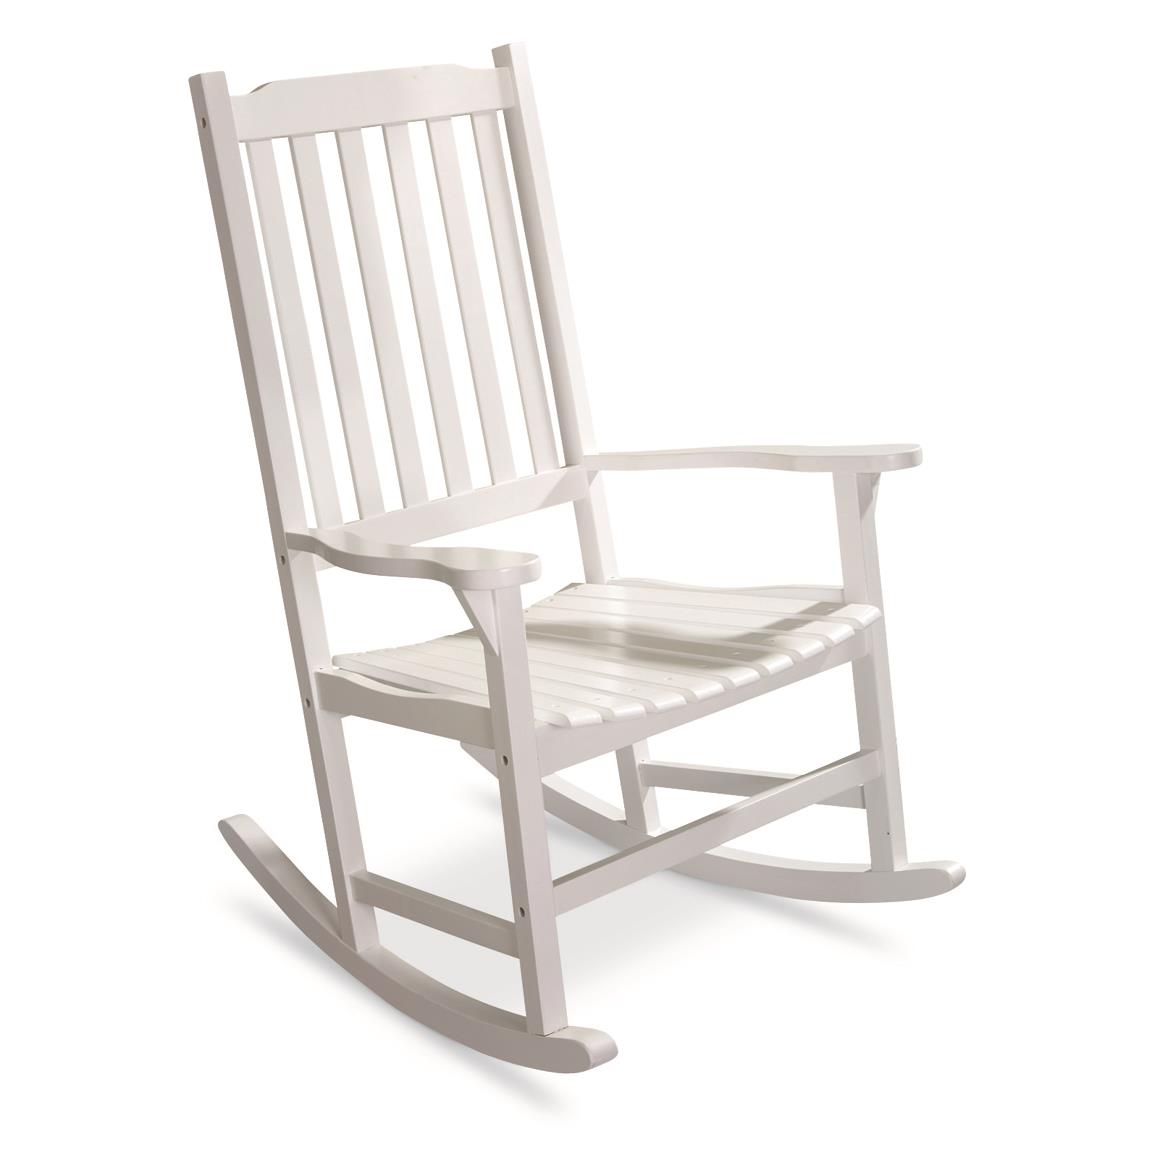 CASTLECREEK Oversized Rocking Chair, 400-lb. Capacity, White